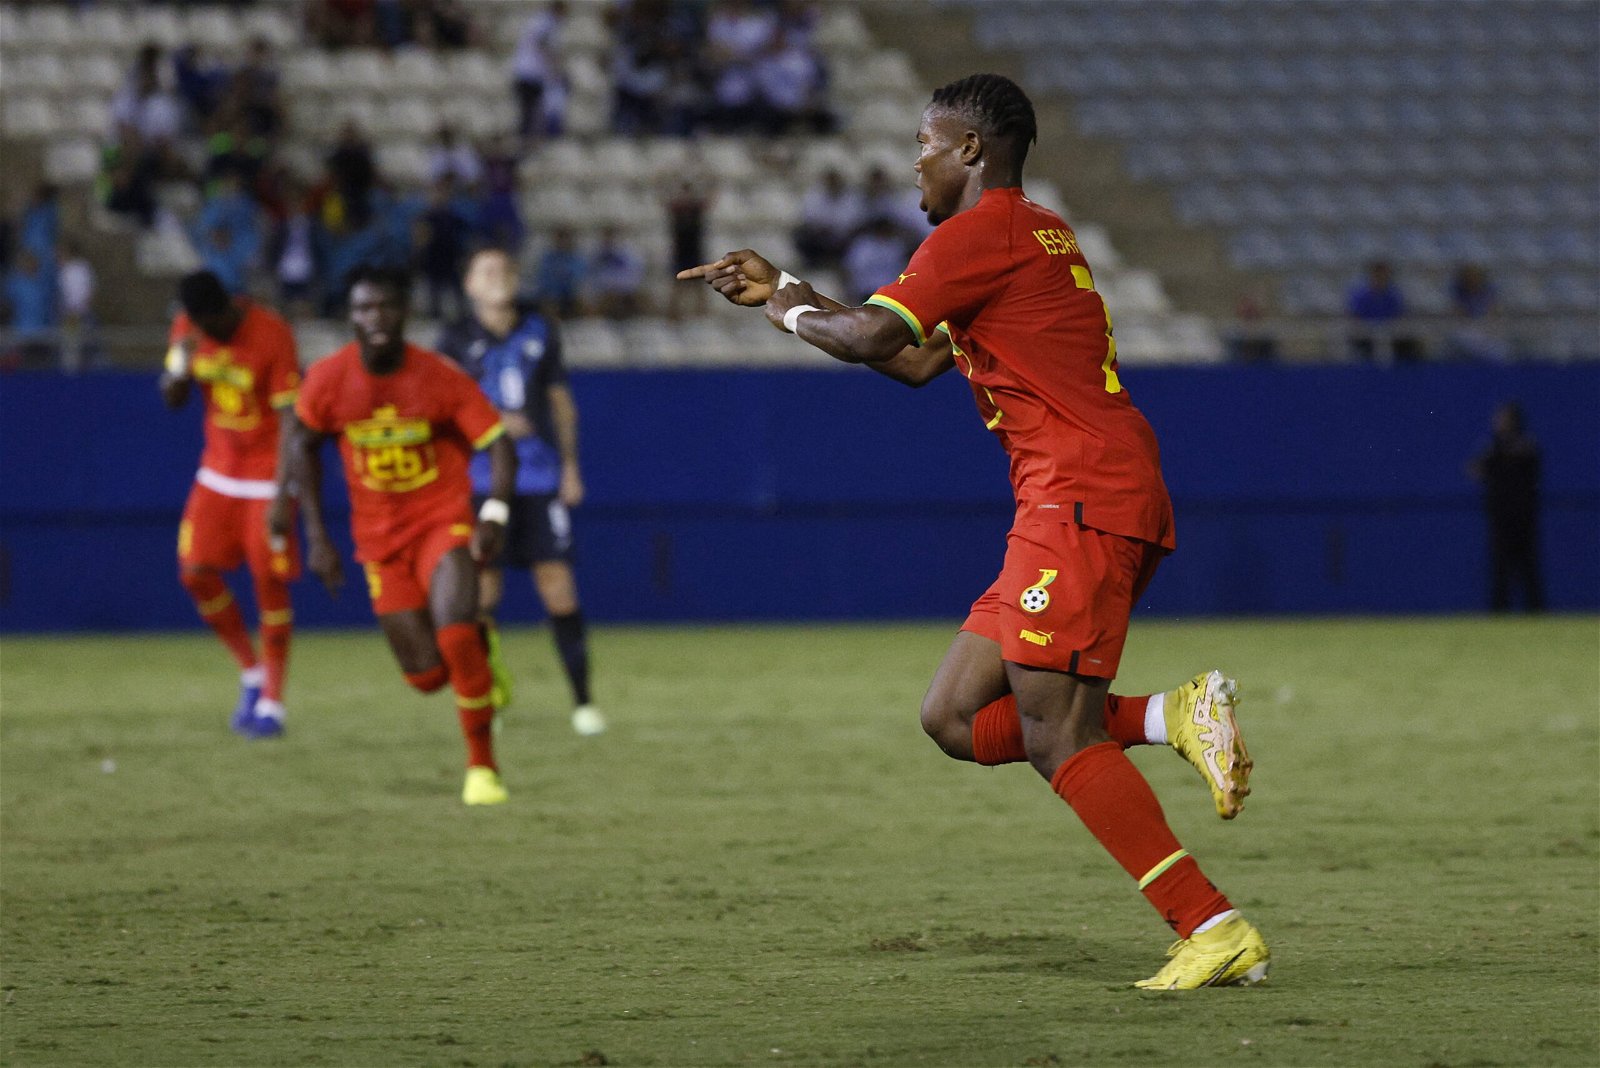 Ghana World Cup squad 2022